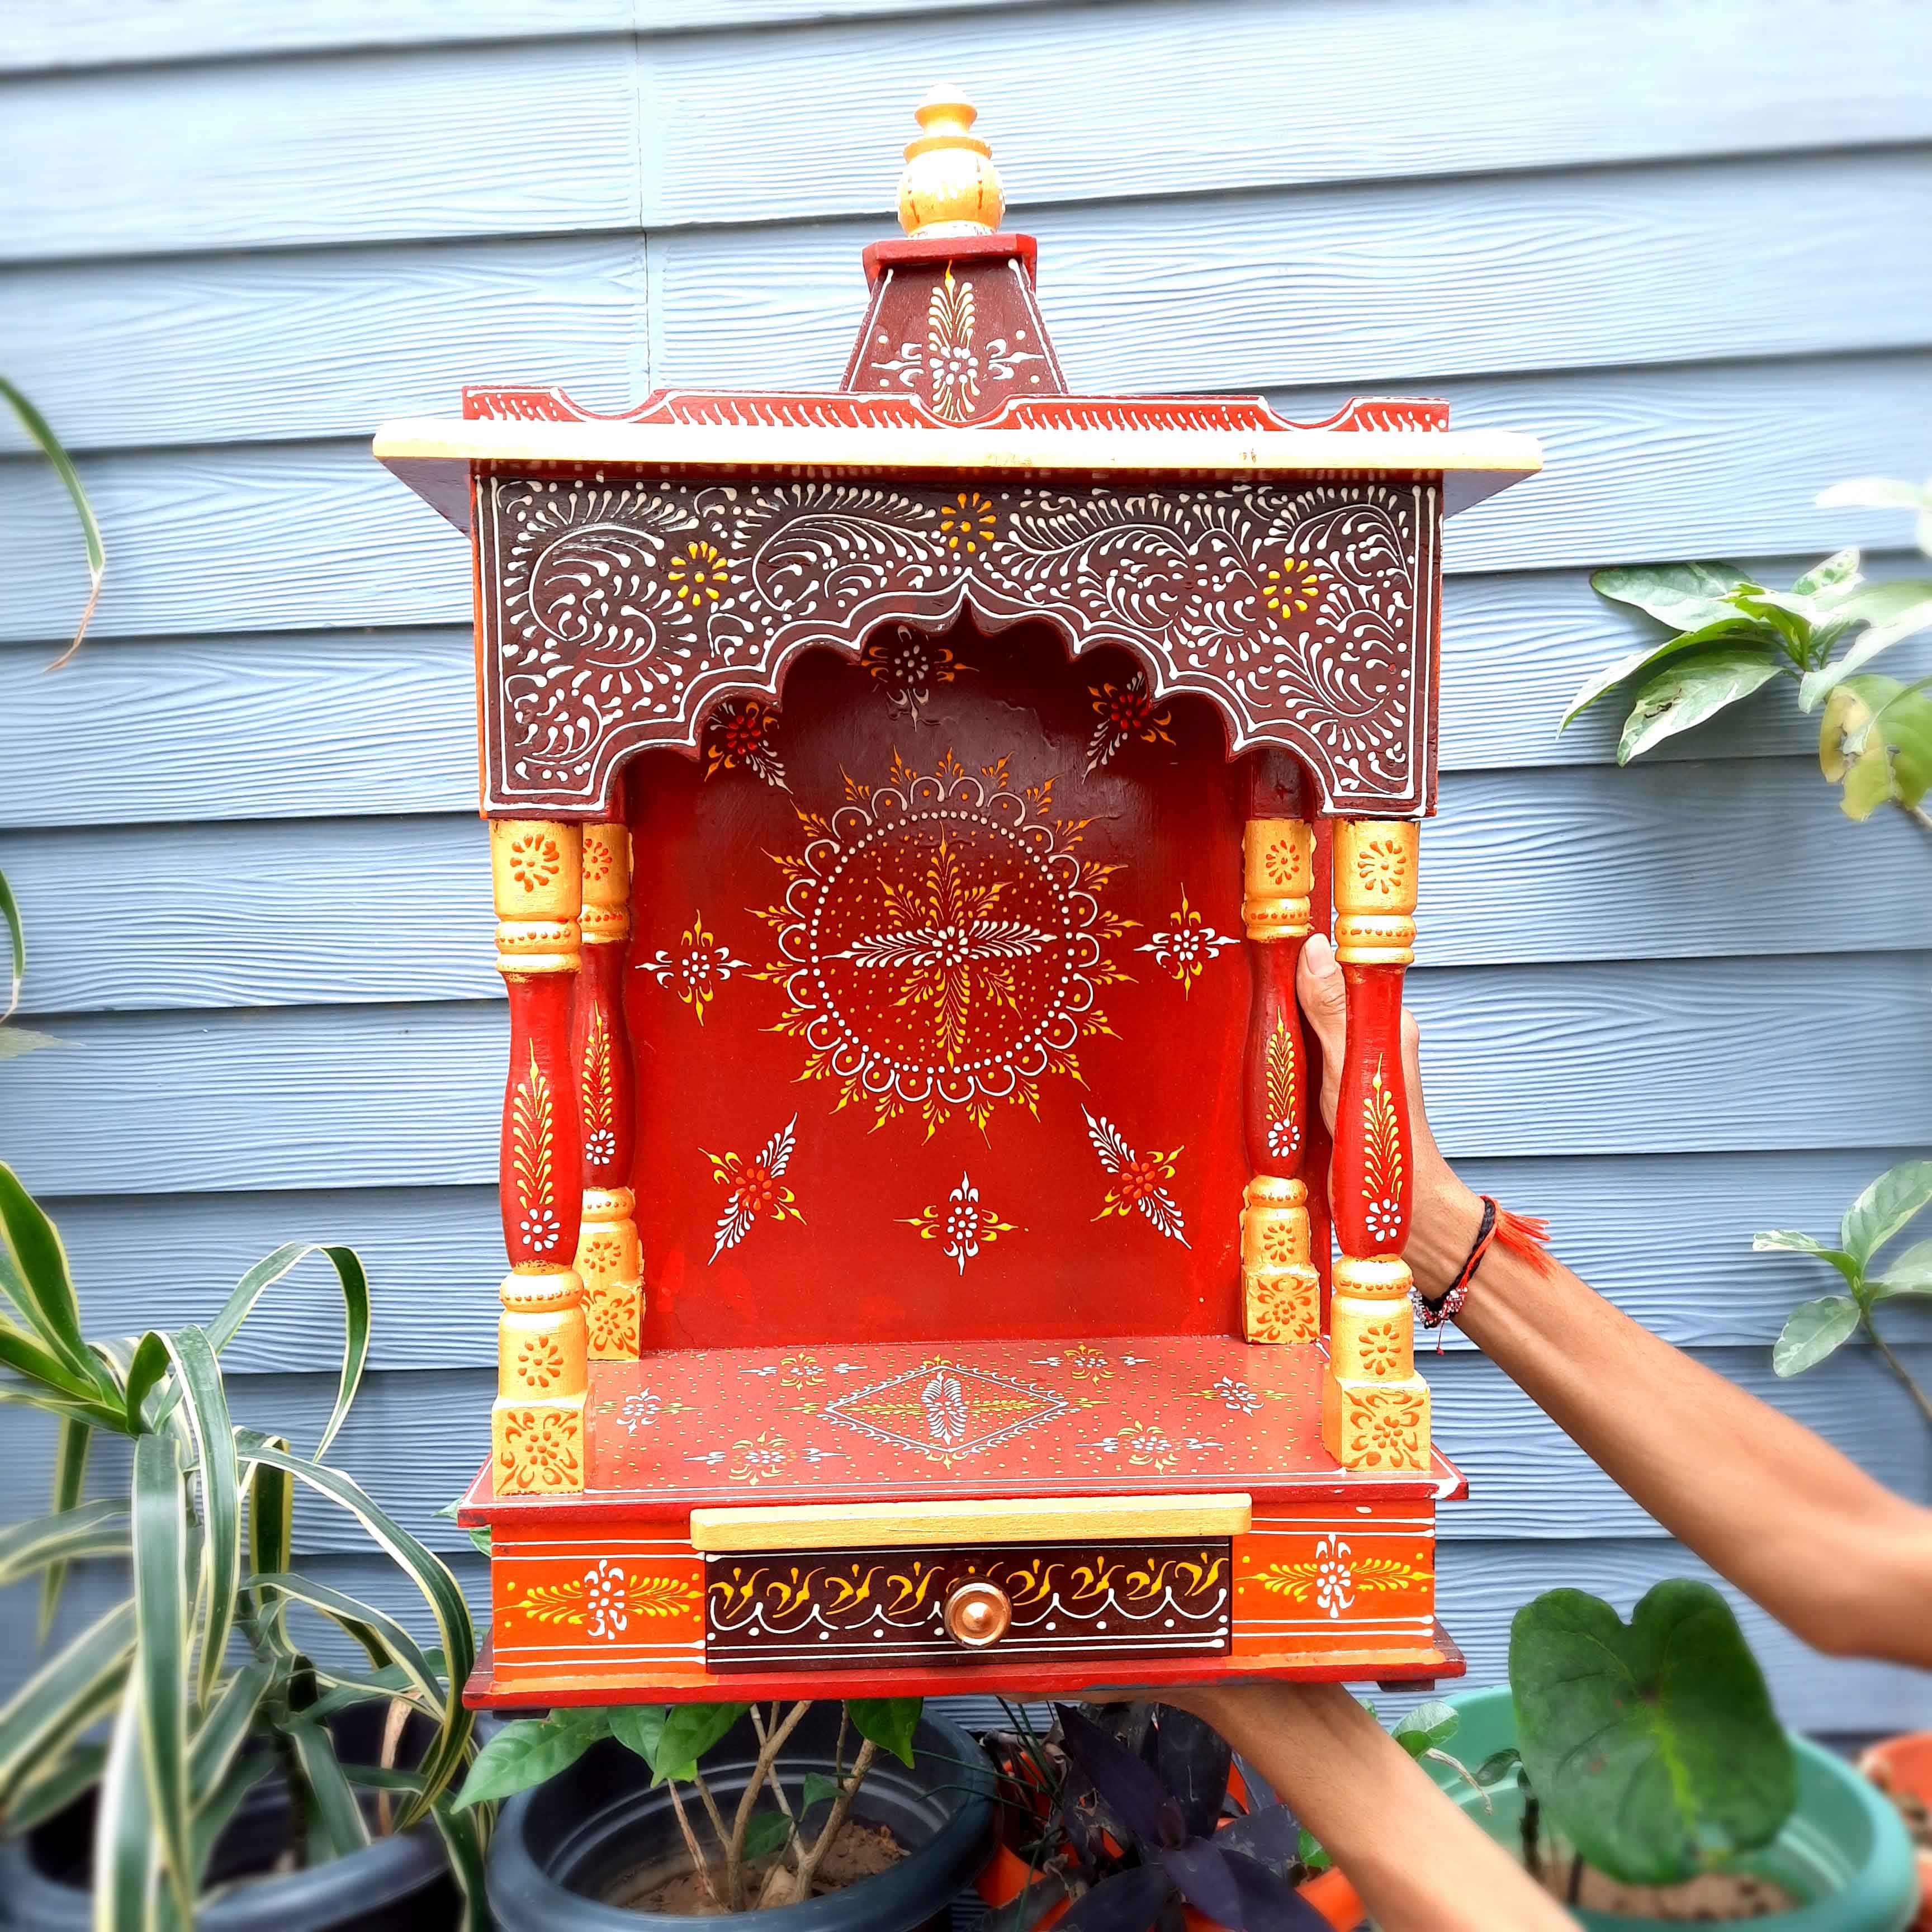 Pooja Mandir | Wooden Temple for Home Big Size -25 Inch - Apkamart #Color_Maroon